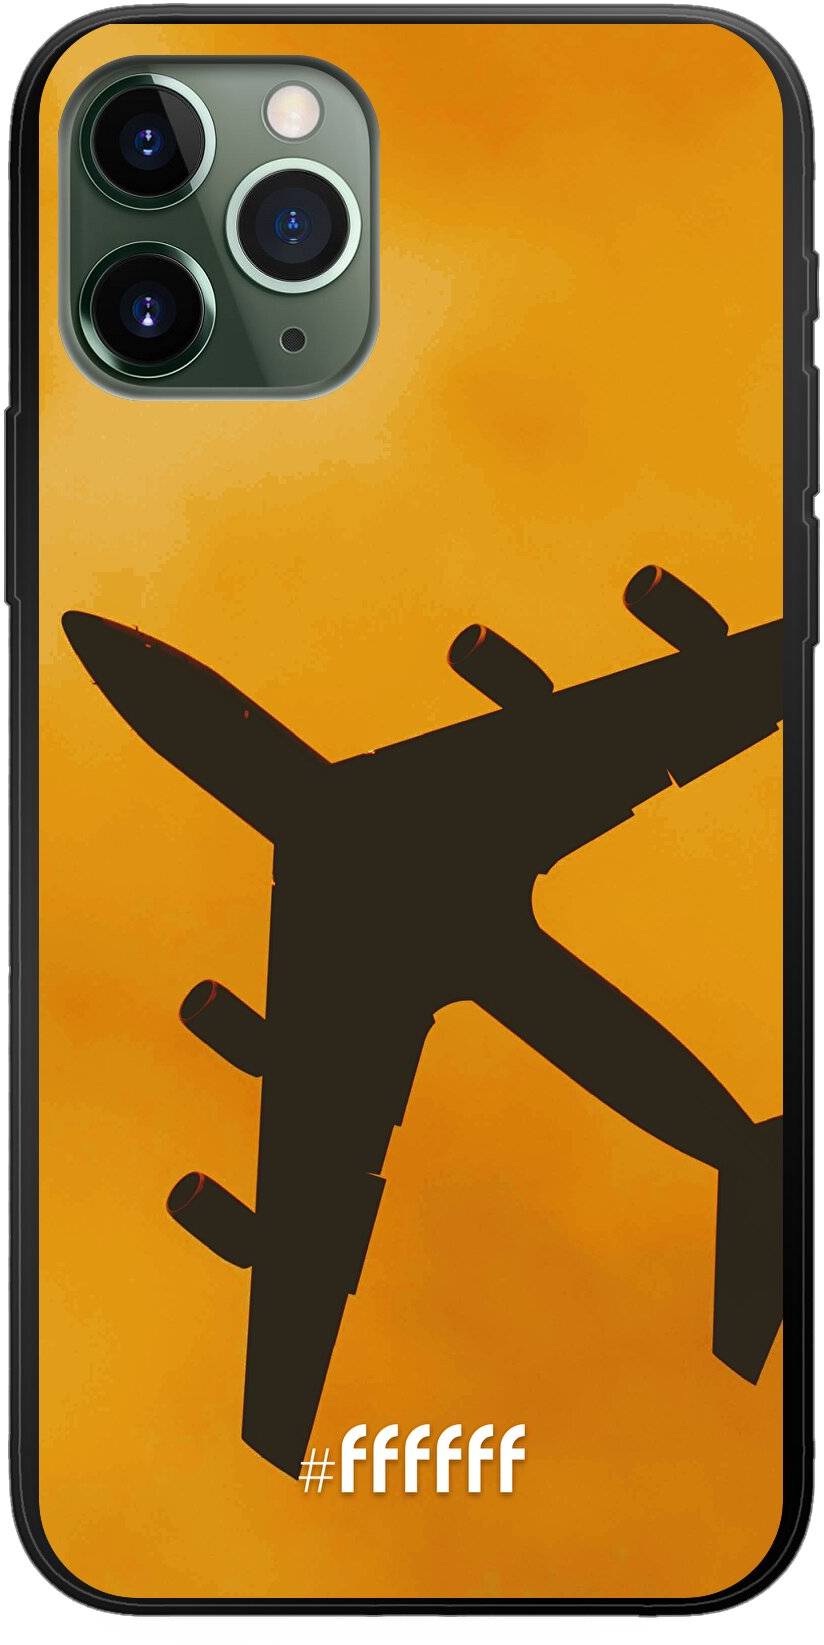 Aeroplane iPhone 11 Pro